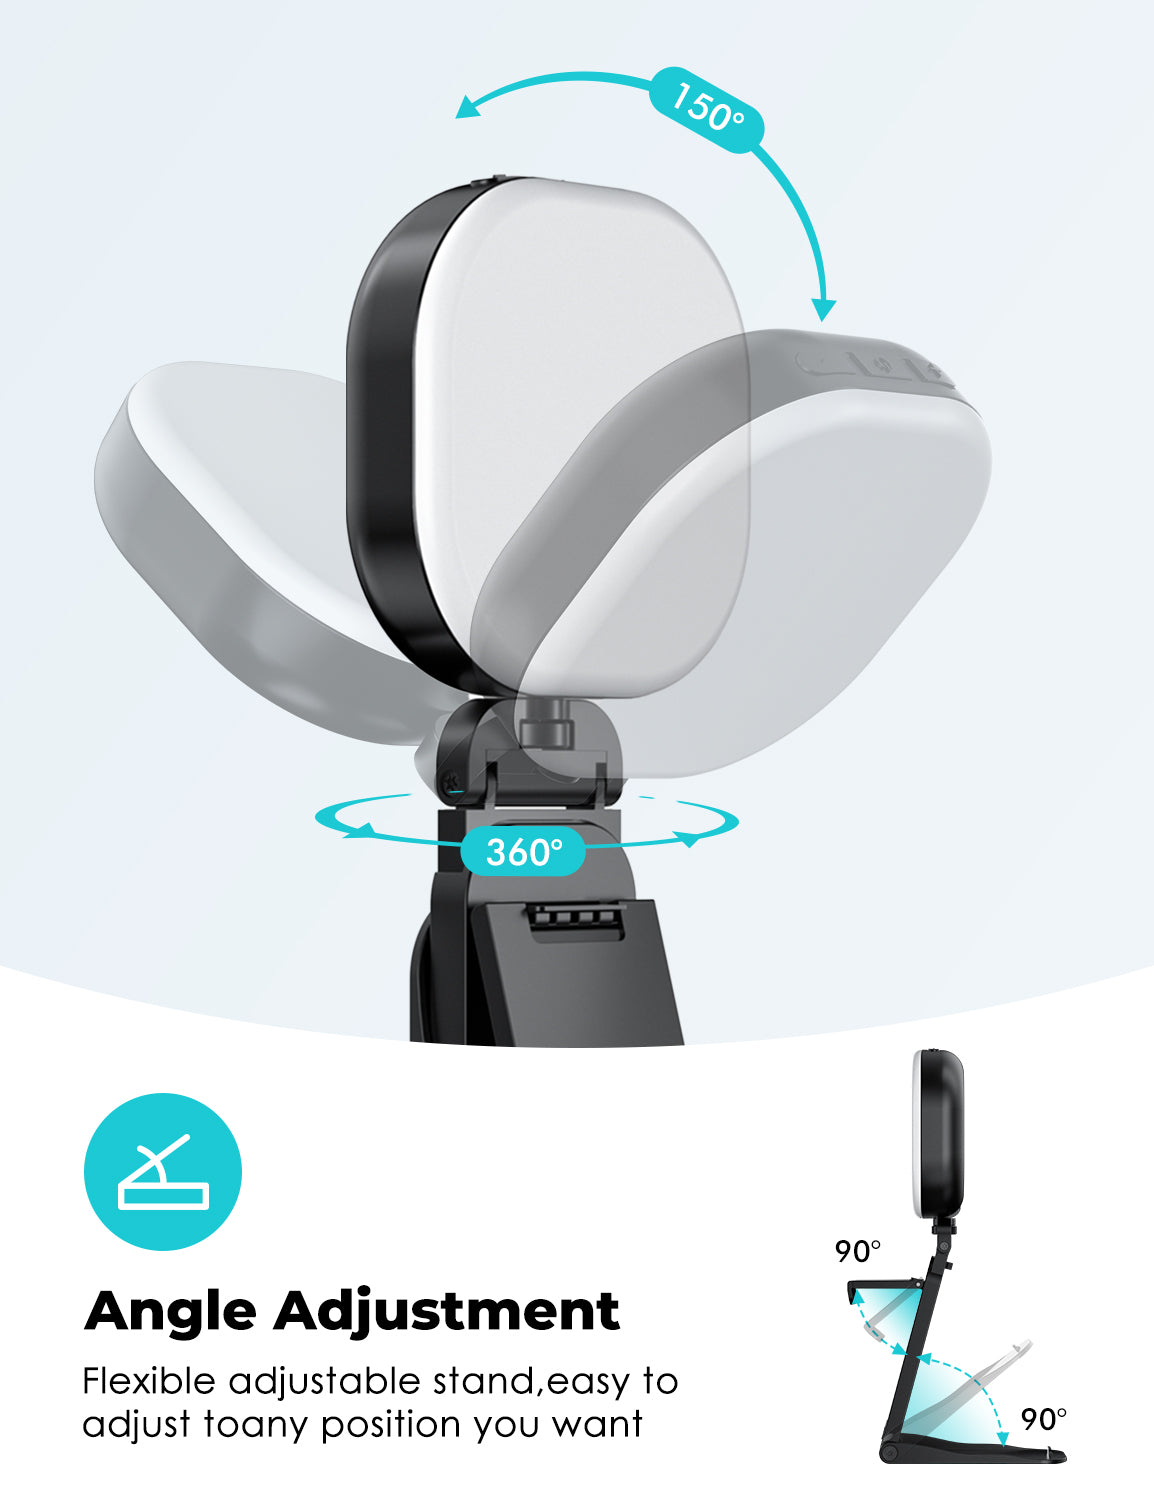 Viozon Extendable Selfie Stand Phone Holder (AP-V6) - viozon